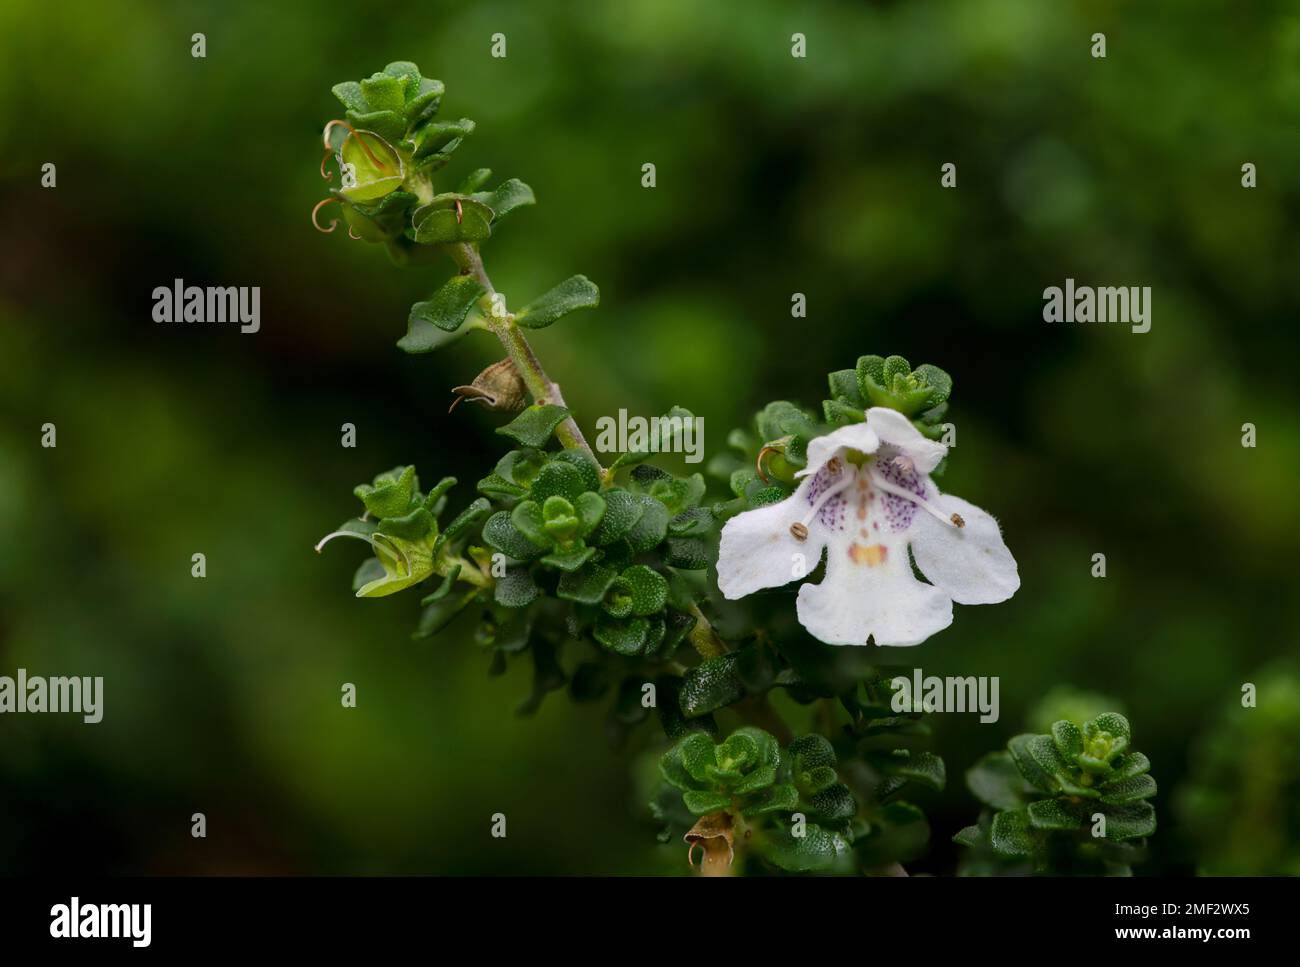 Macro shot of a flower on an alpine mint bush (prostanthera cuneata) in bloom Stock Photo